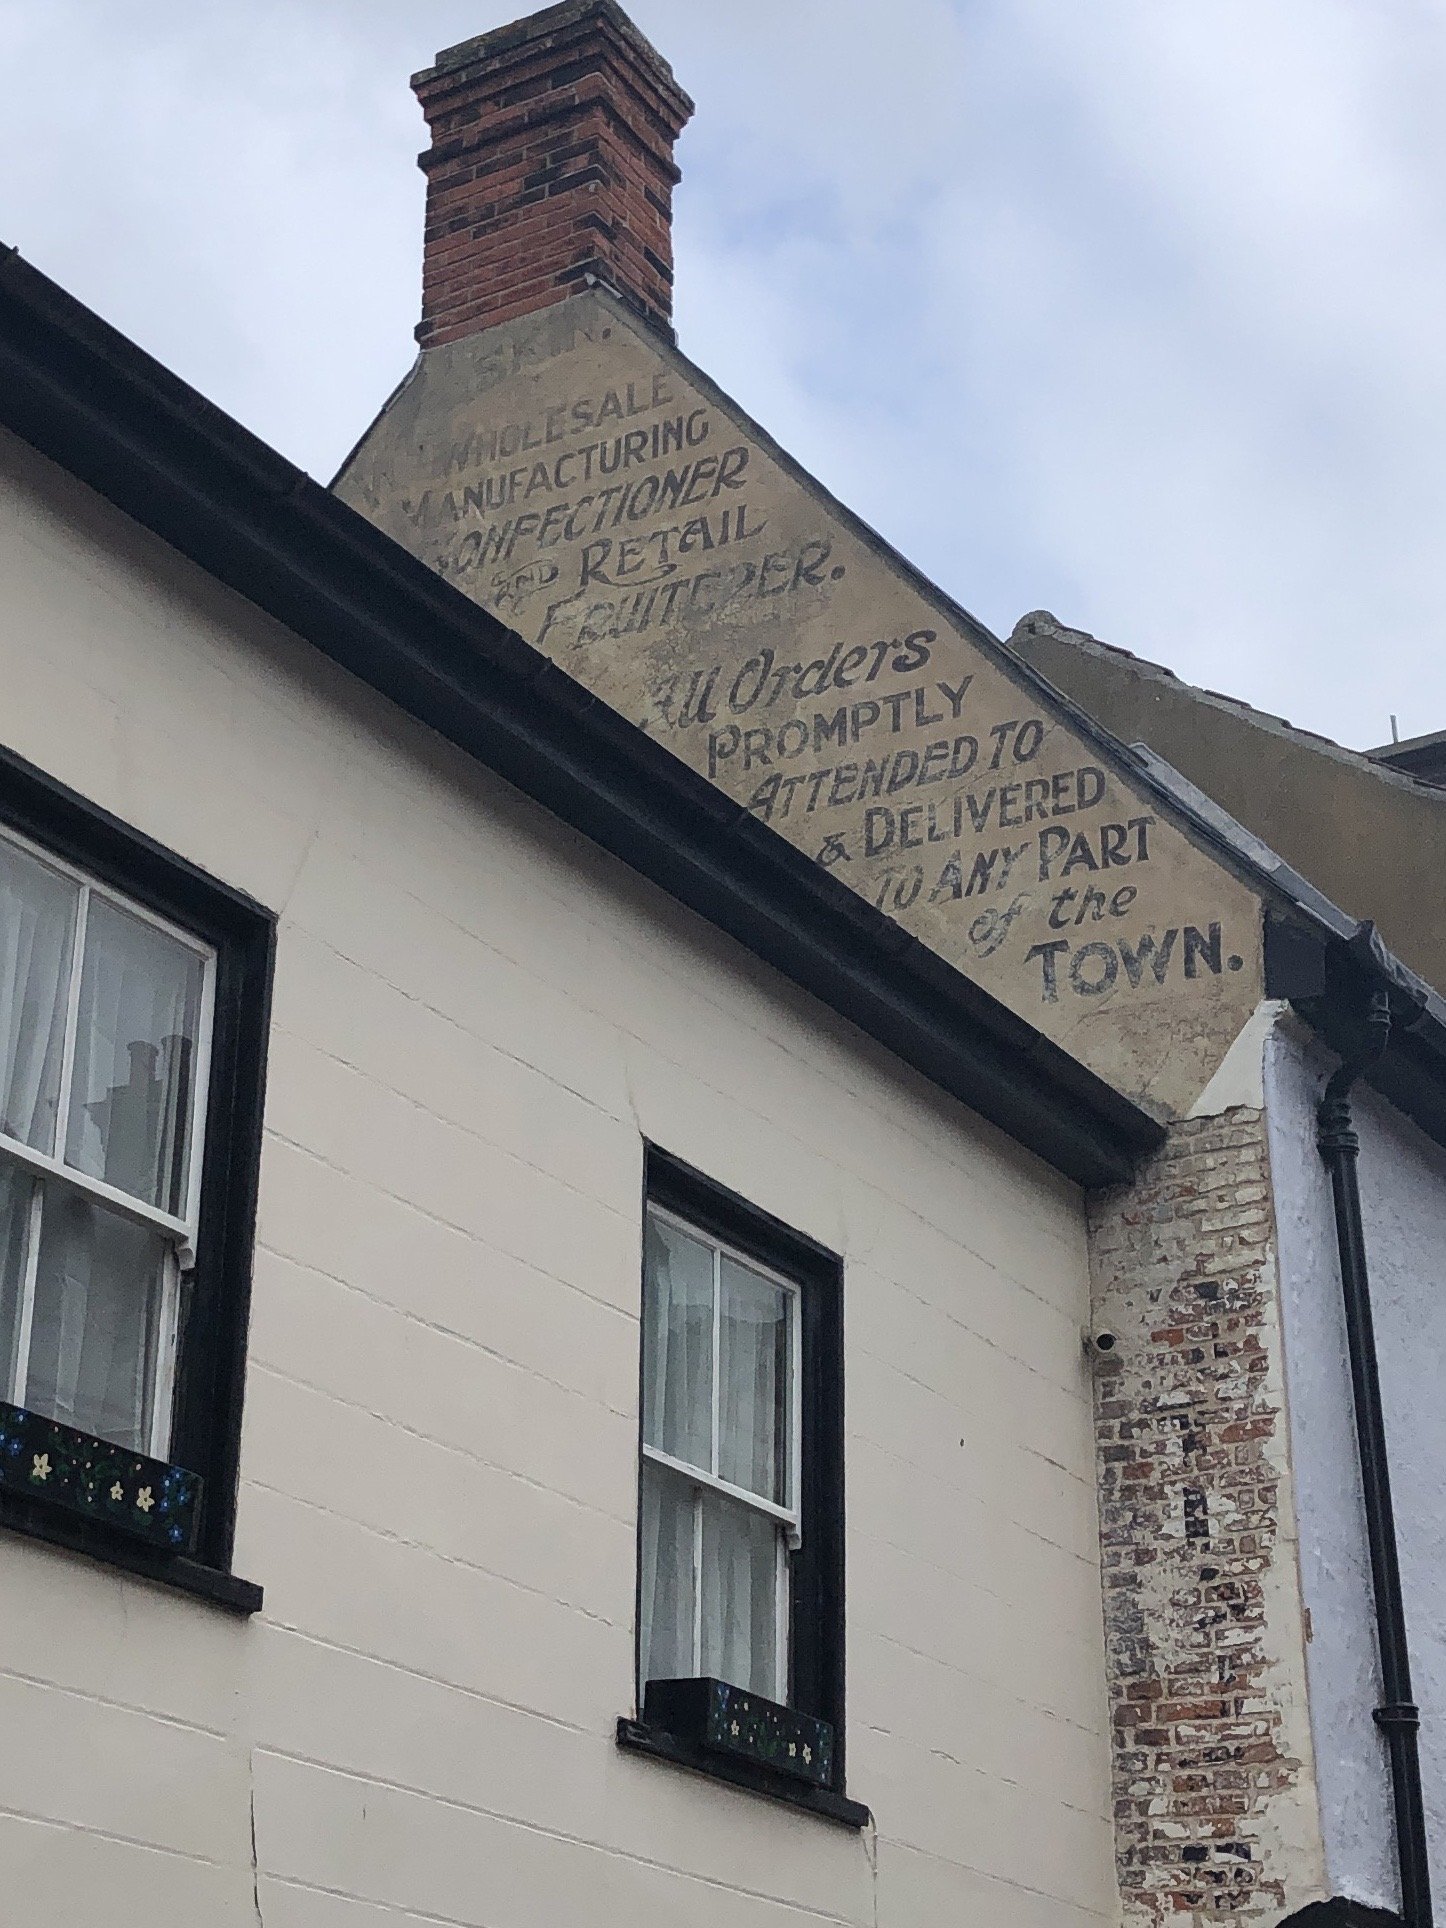 Words on a circa 1401 building